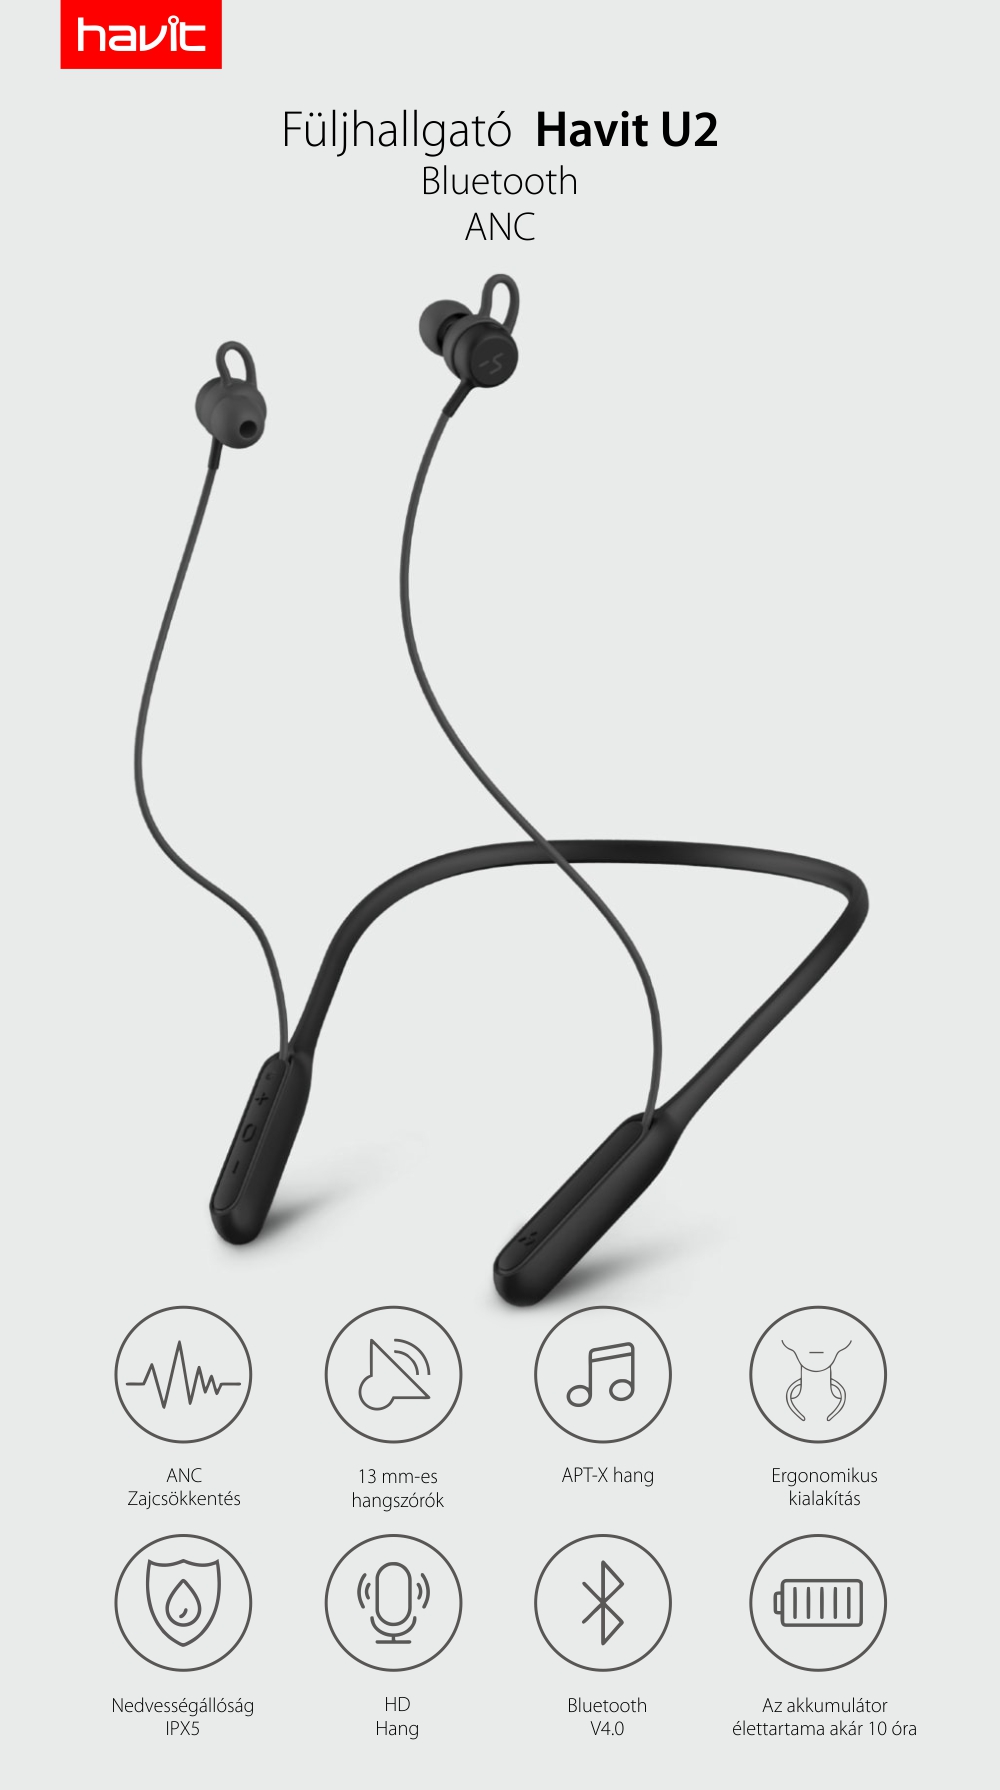 Fülhallgató Havit U2, Bluetooth 4.0, 160 mAh akkumulátor, 32 ohmos impedancia